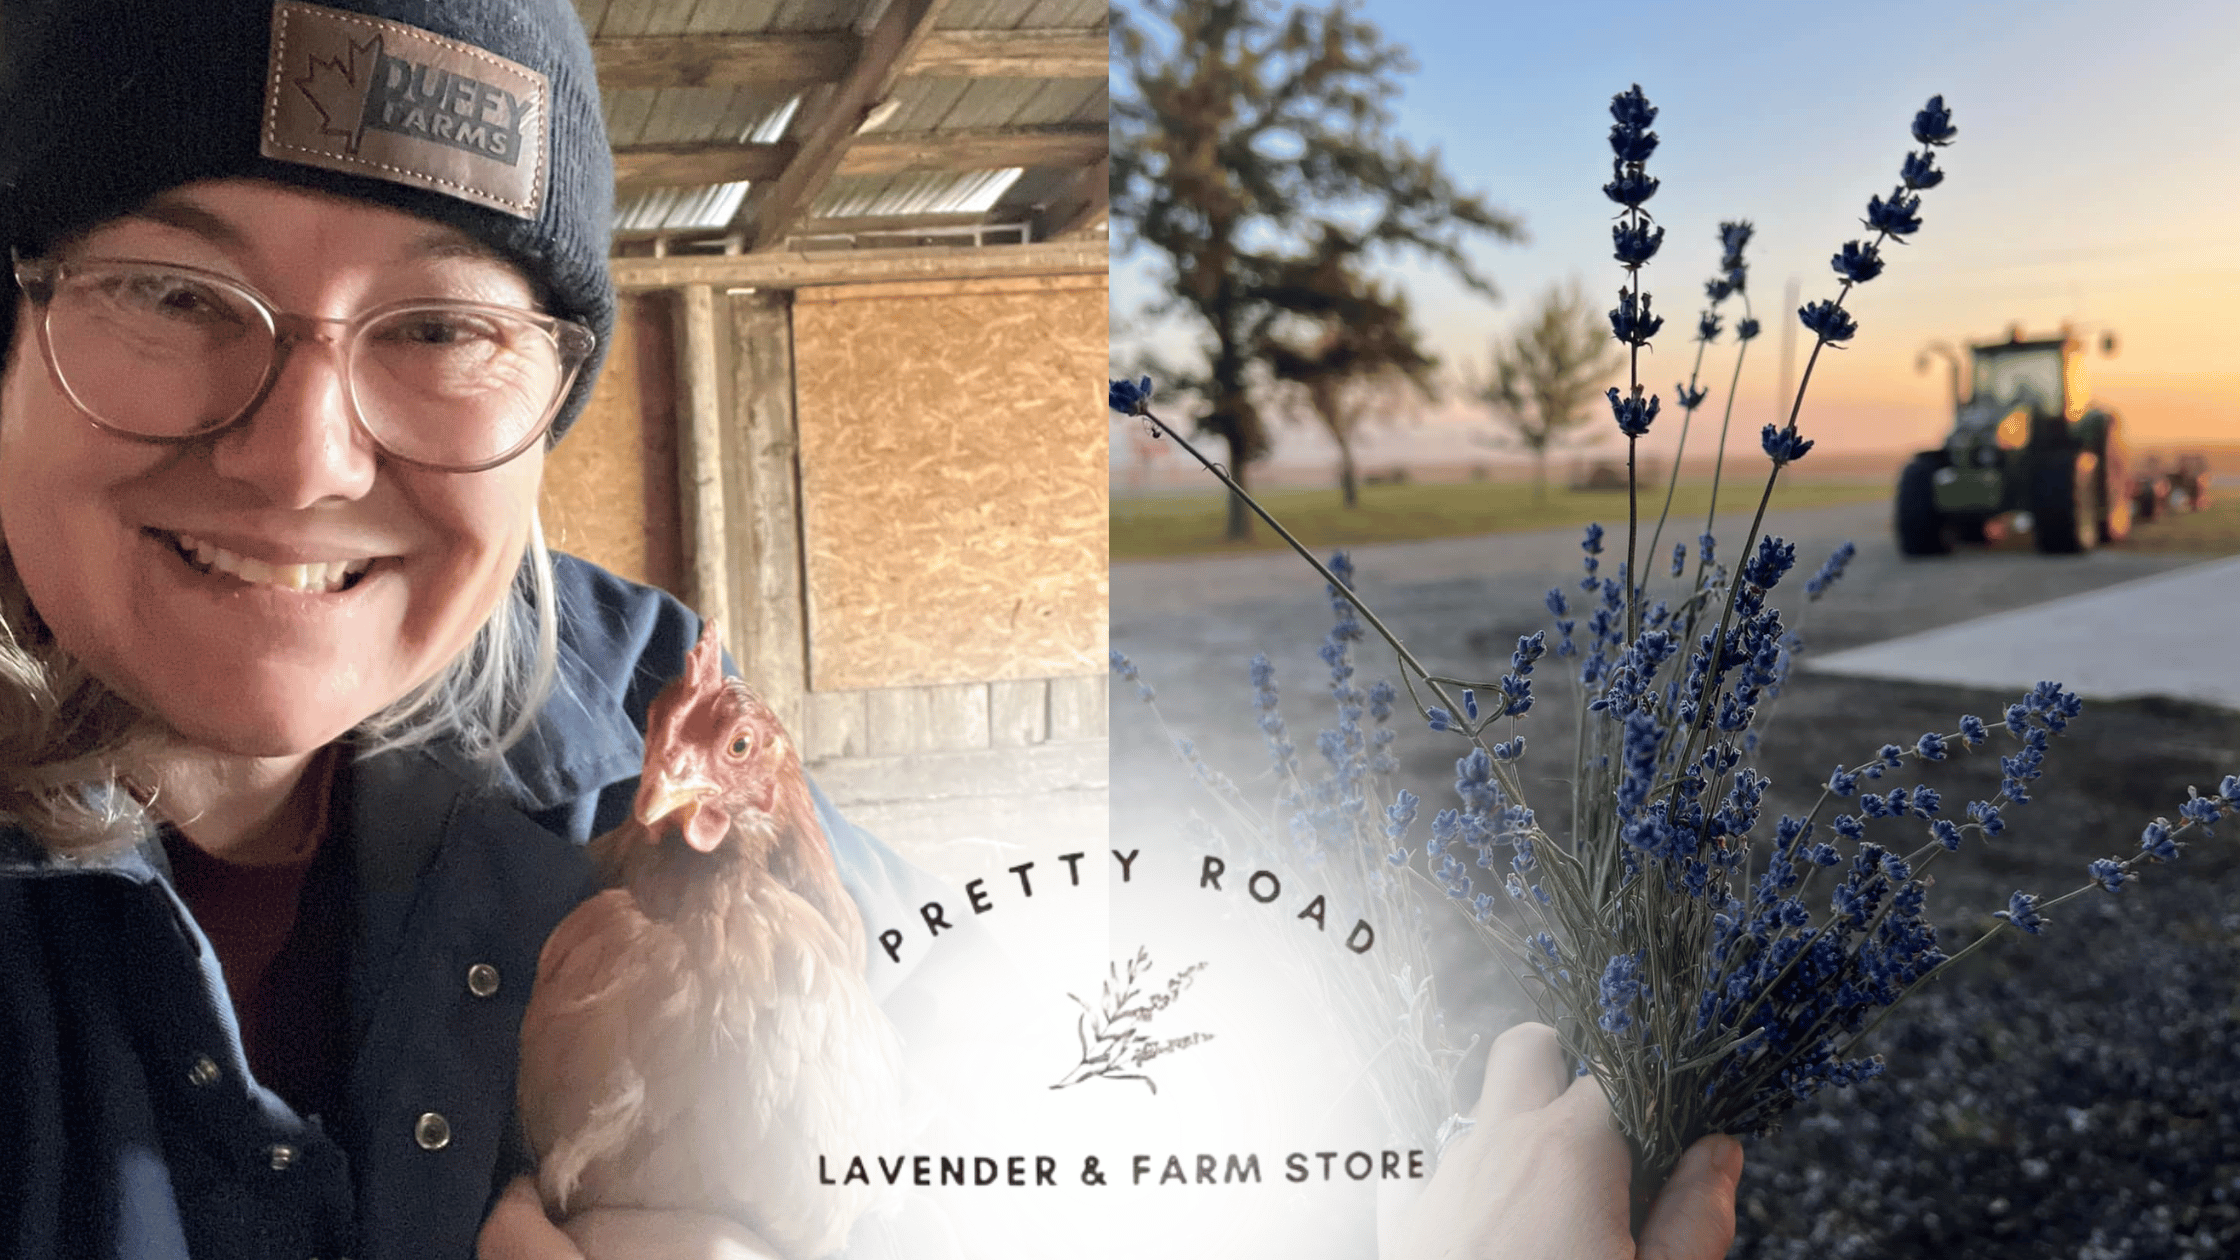 Building a Profitable Farm Subscription Program with Pretty Road Co. Lavender and Farm Store